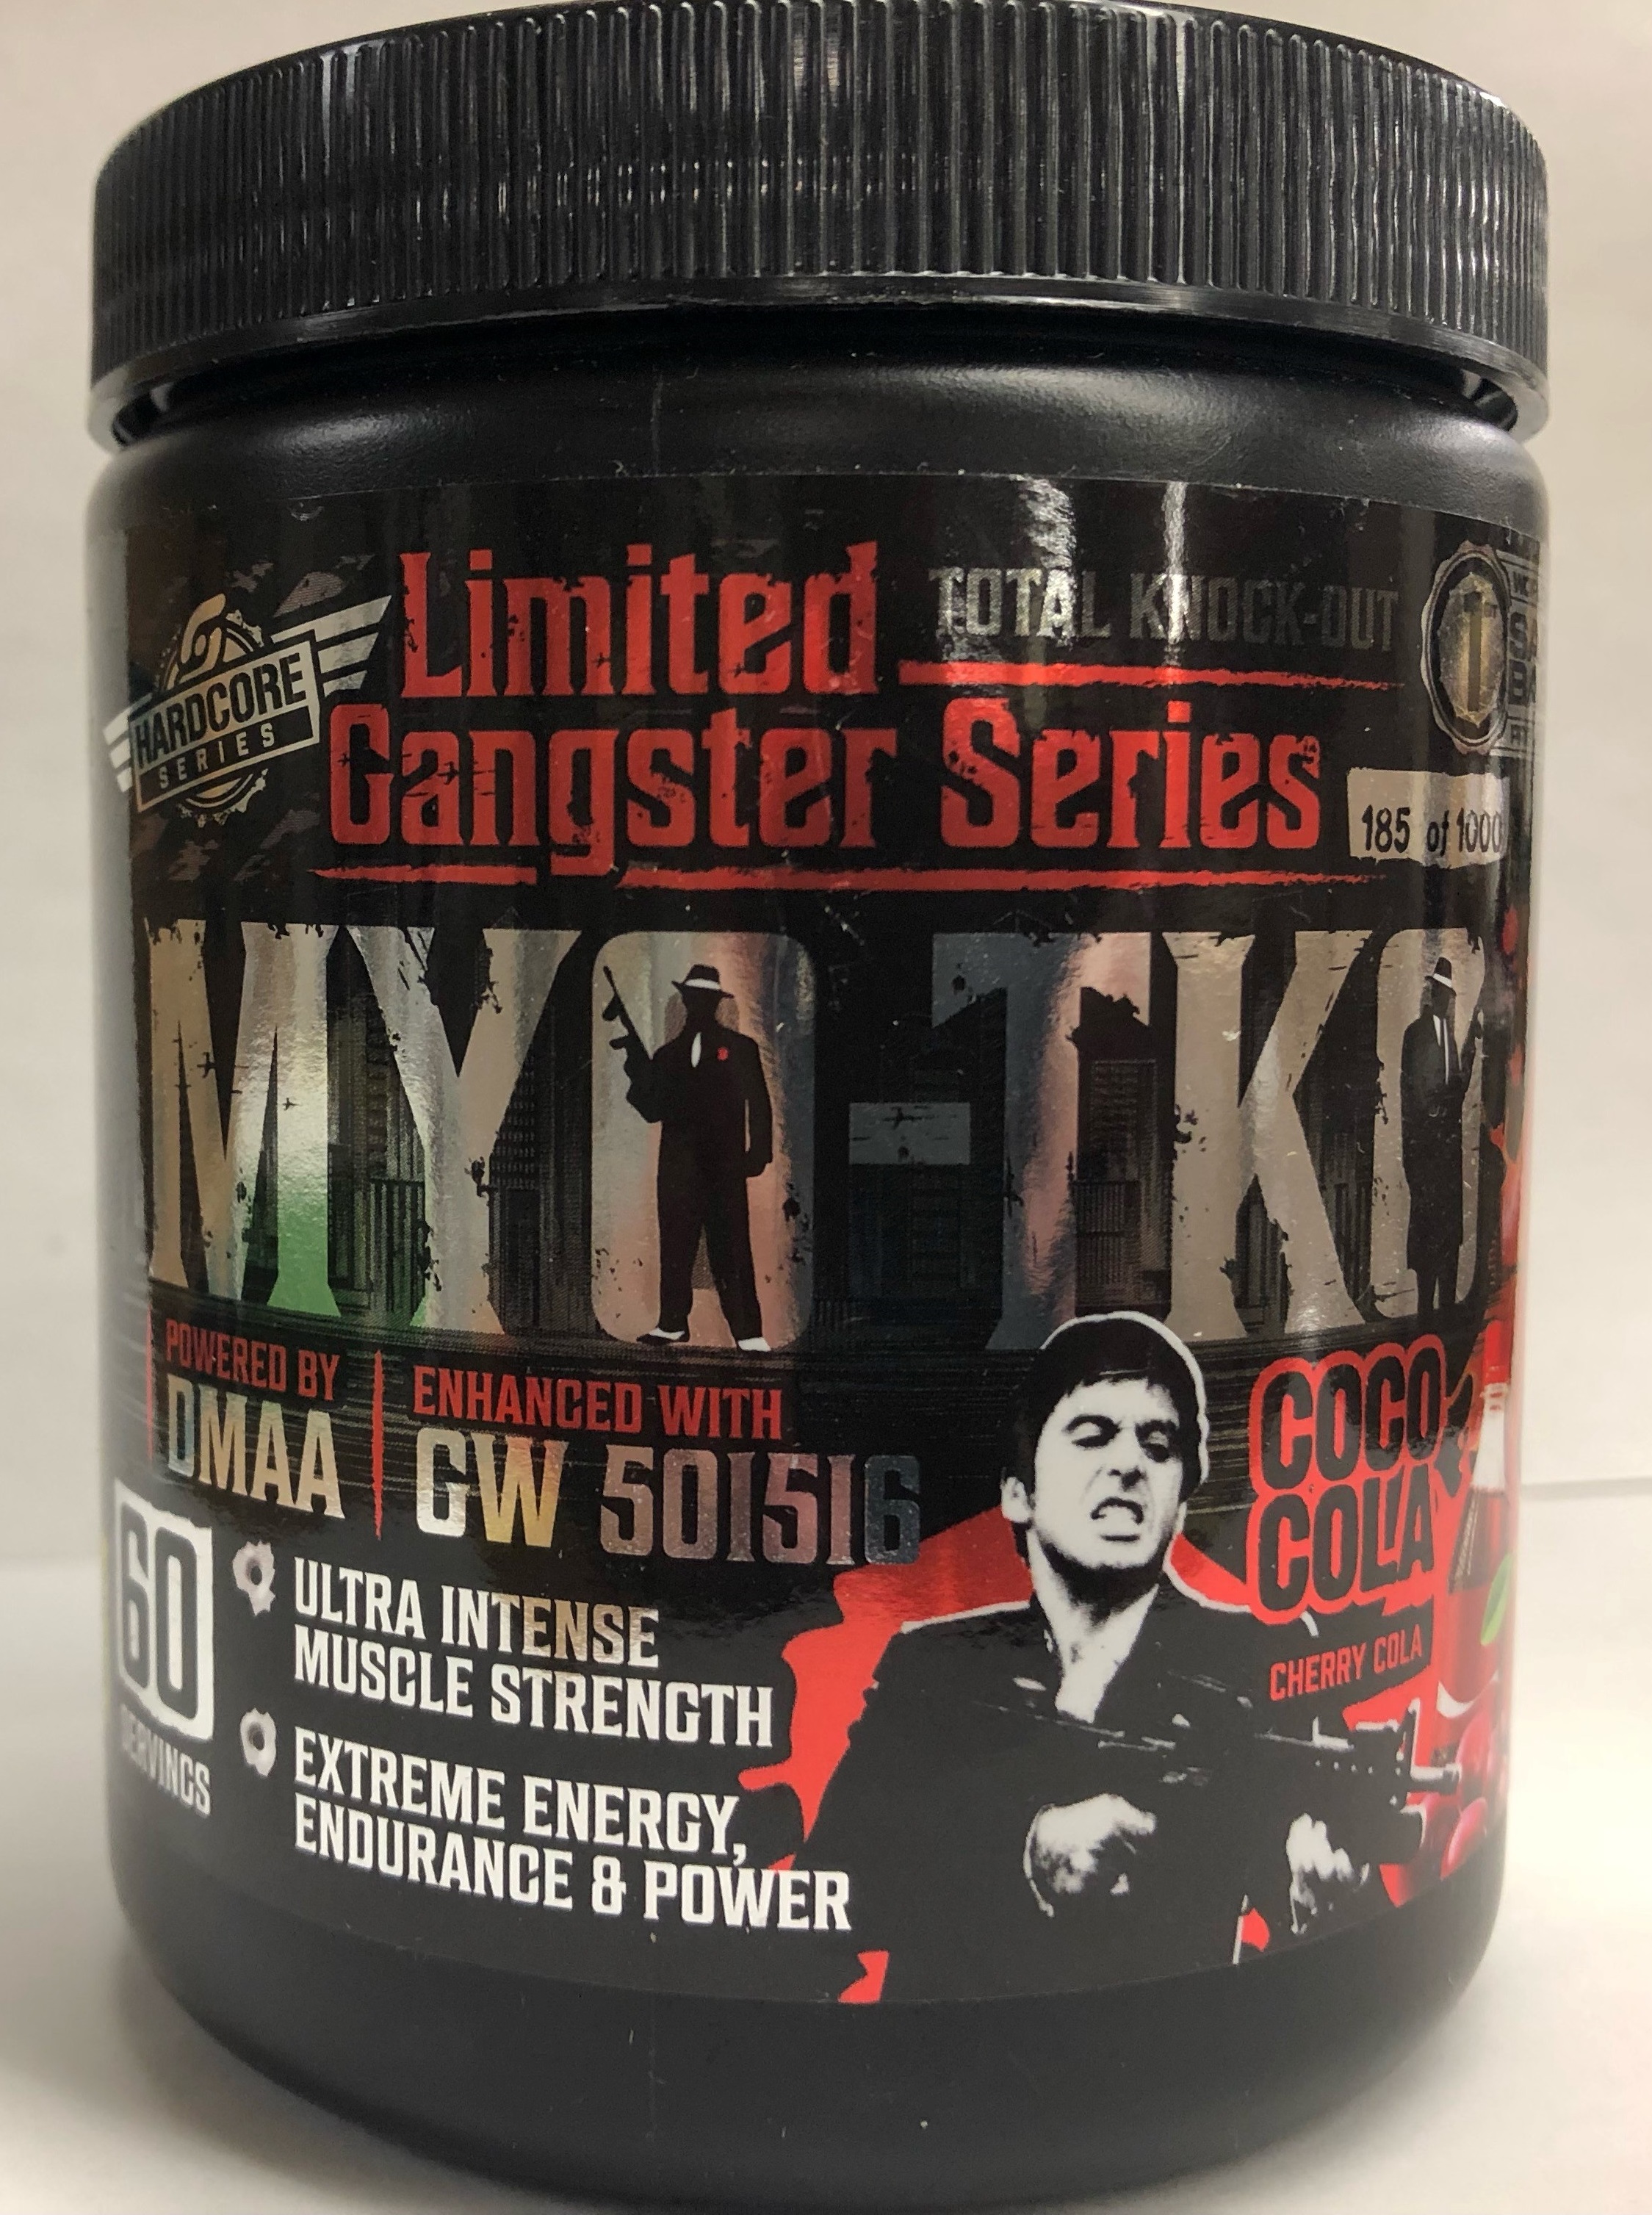 Limited Gangster Series Myo-TKO, Cherry Cola